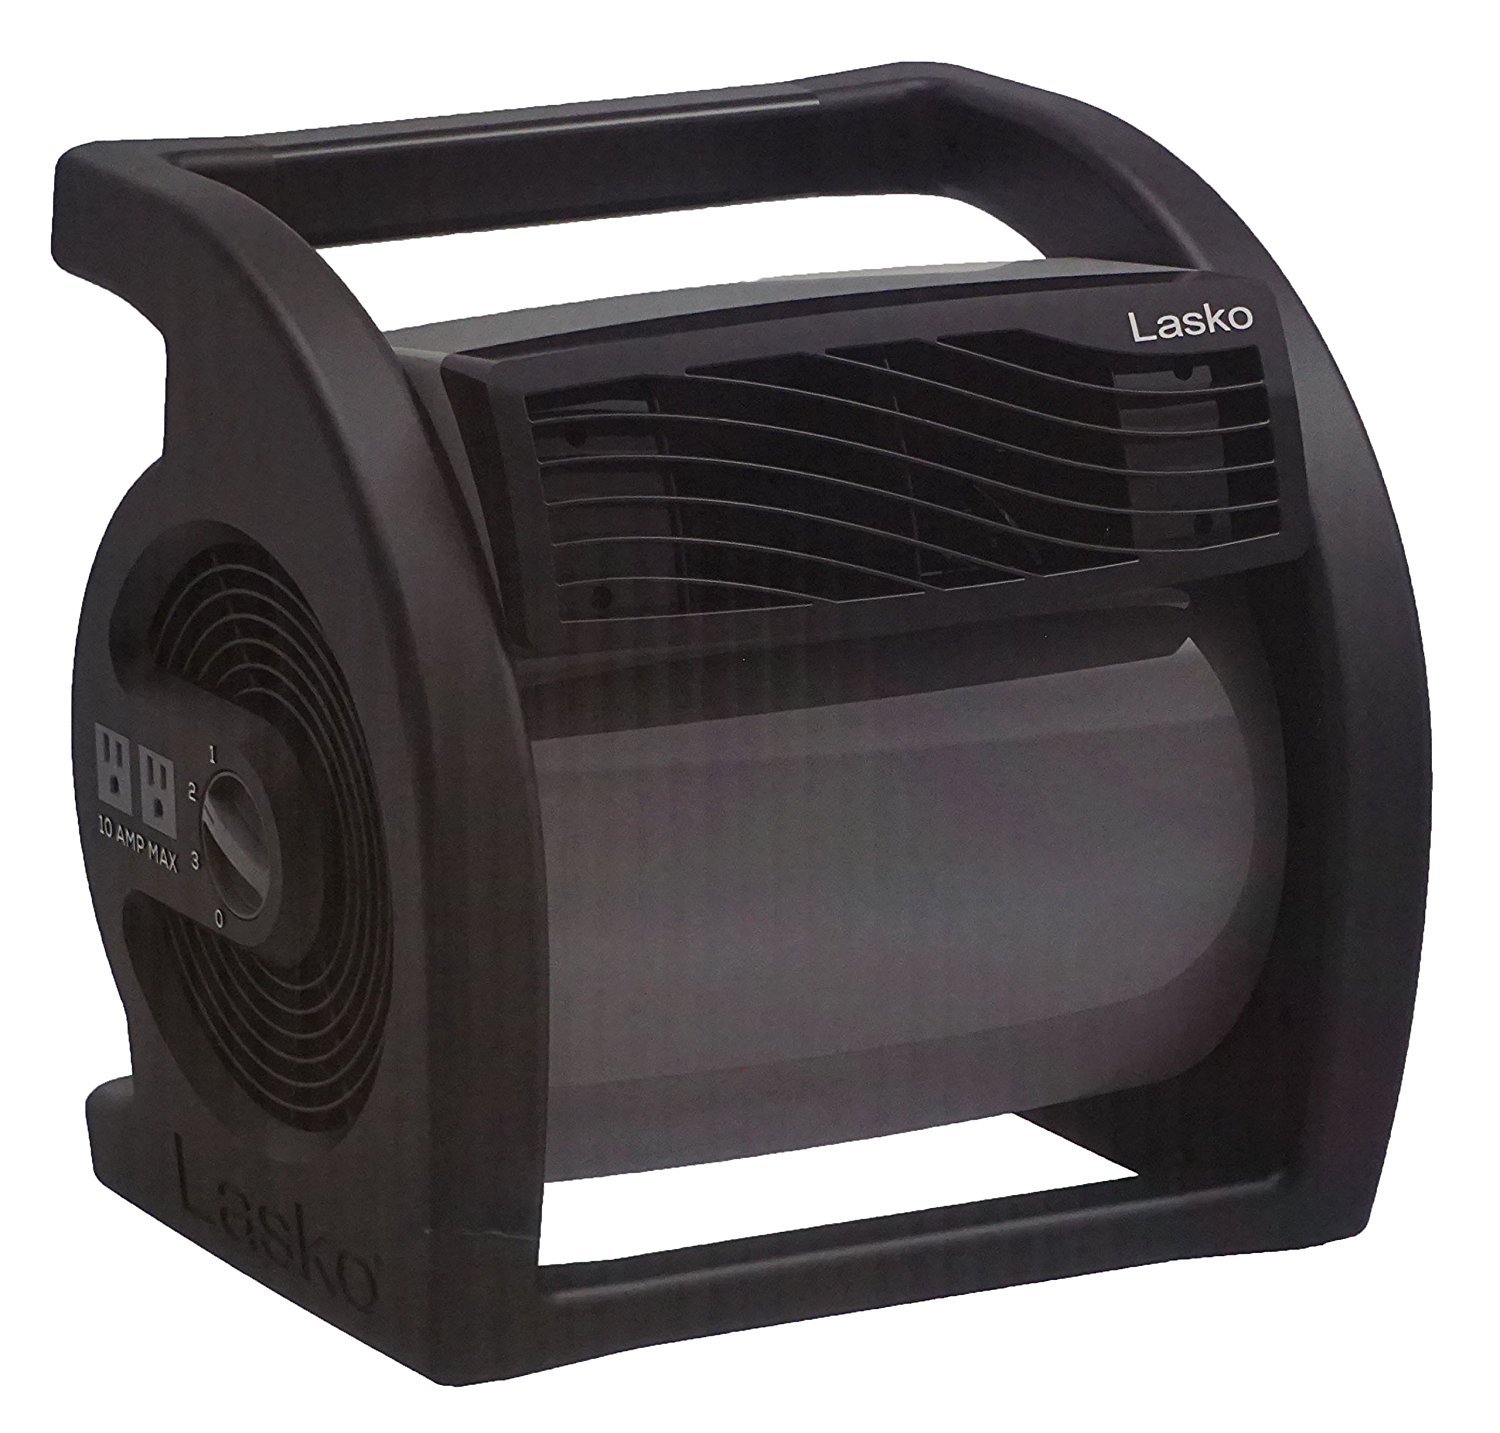 Lasko Products Lasko Max Performance Pivoting Utility Fan Model U15720